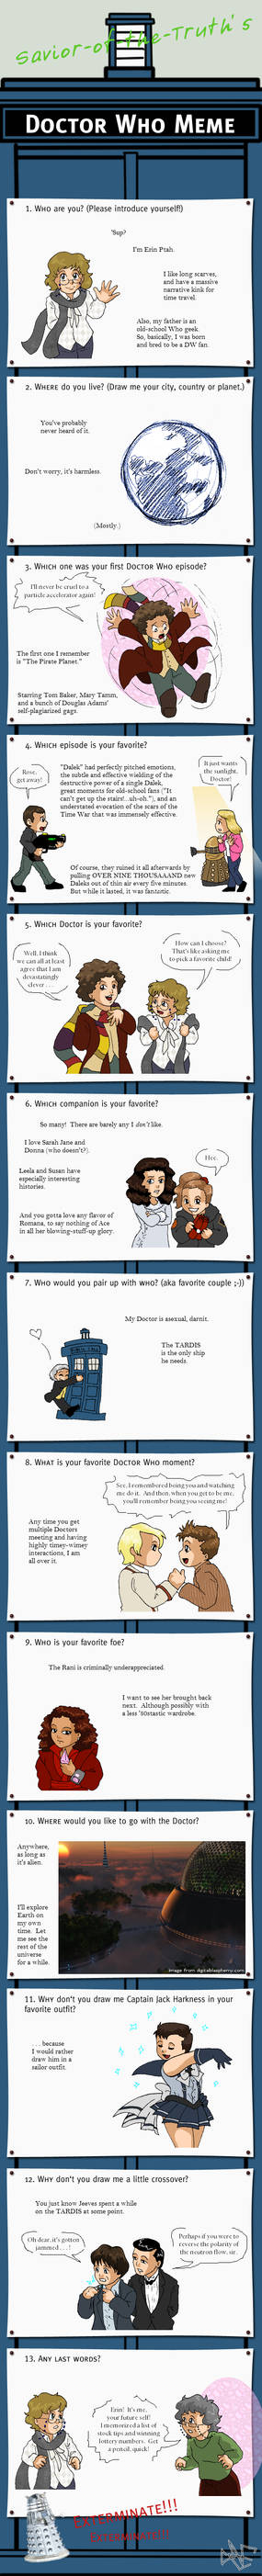 Doctor Who TARDIS Meme